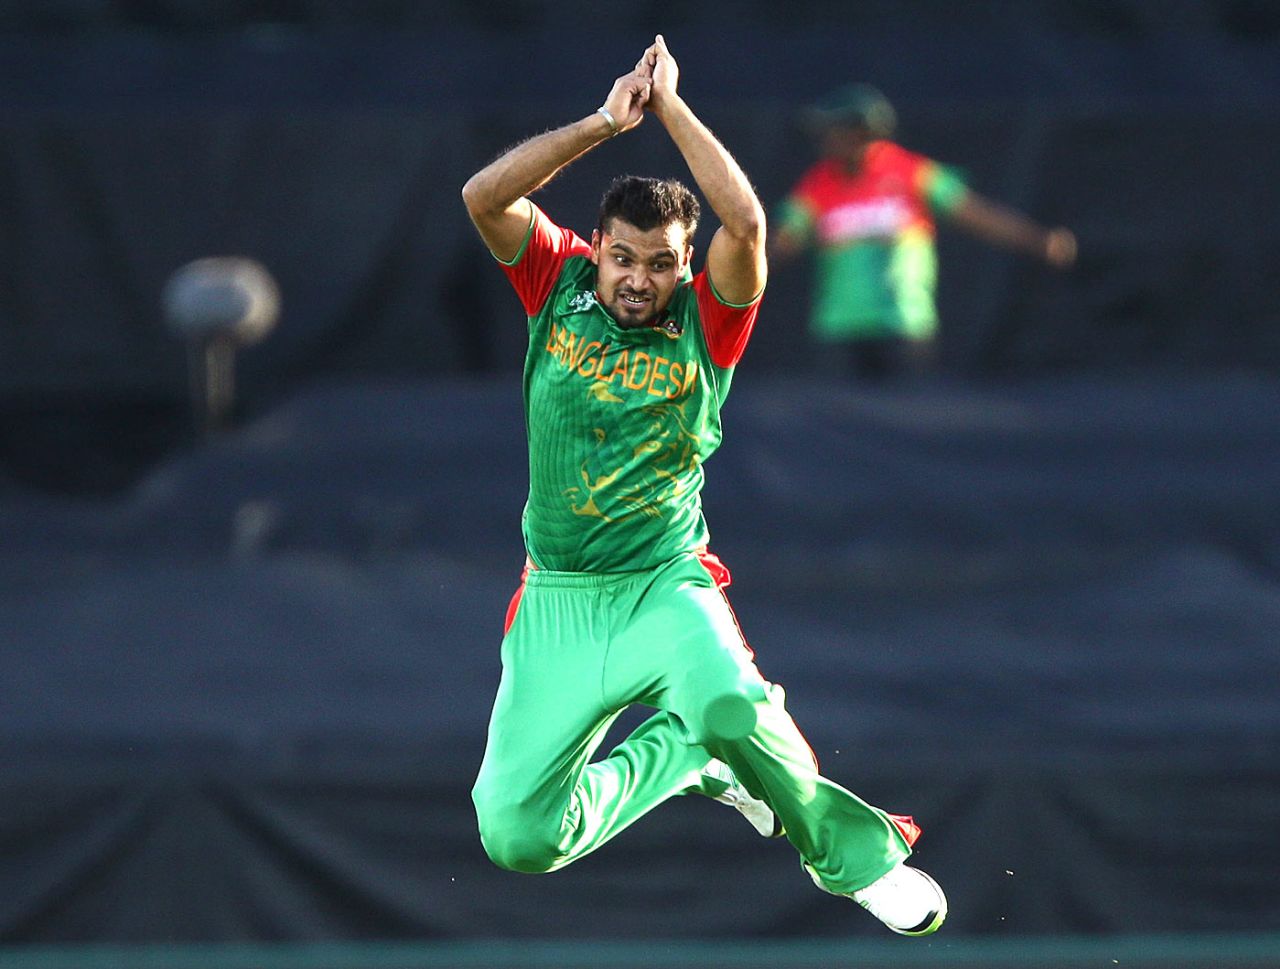 Mashrafe Mortaza celebrates a wicket, Afghanistan v Bangladesh, World Cup 2015, Group A, Canberra, February 18, 2015